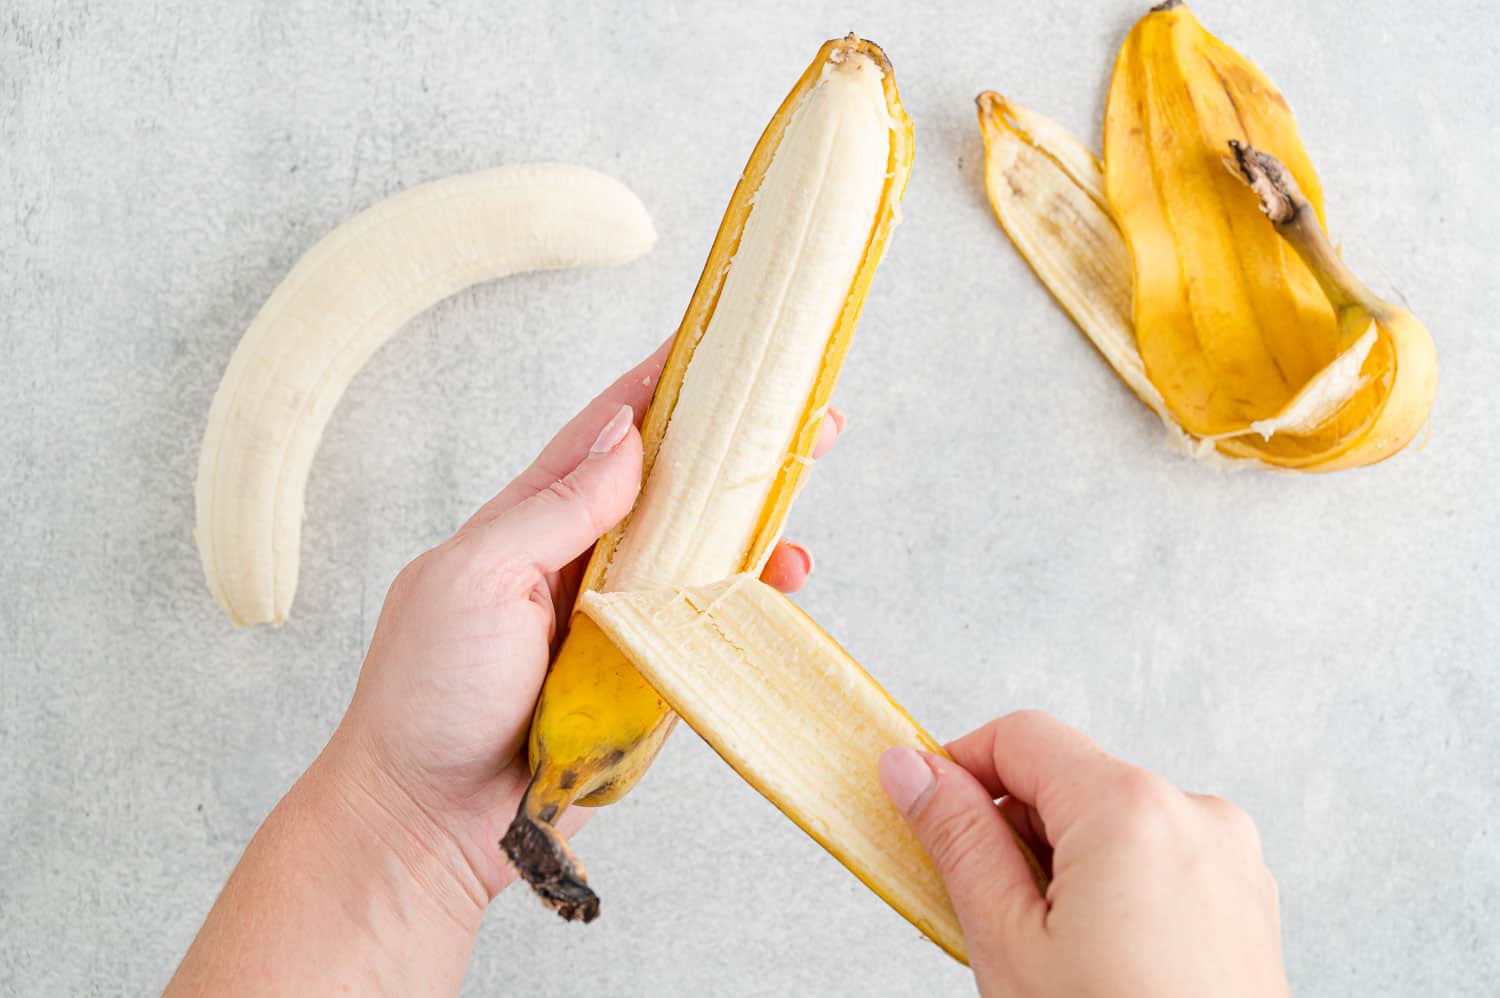 Banana being peeled.